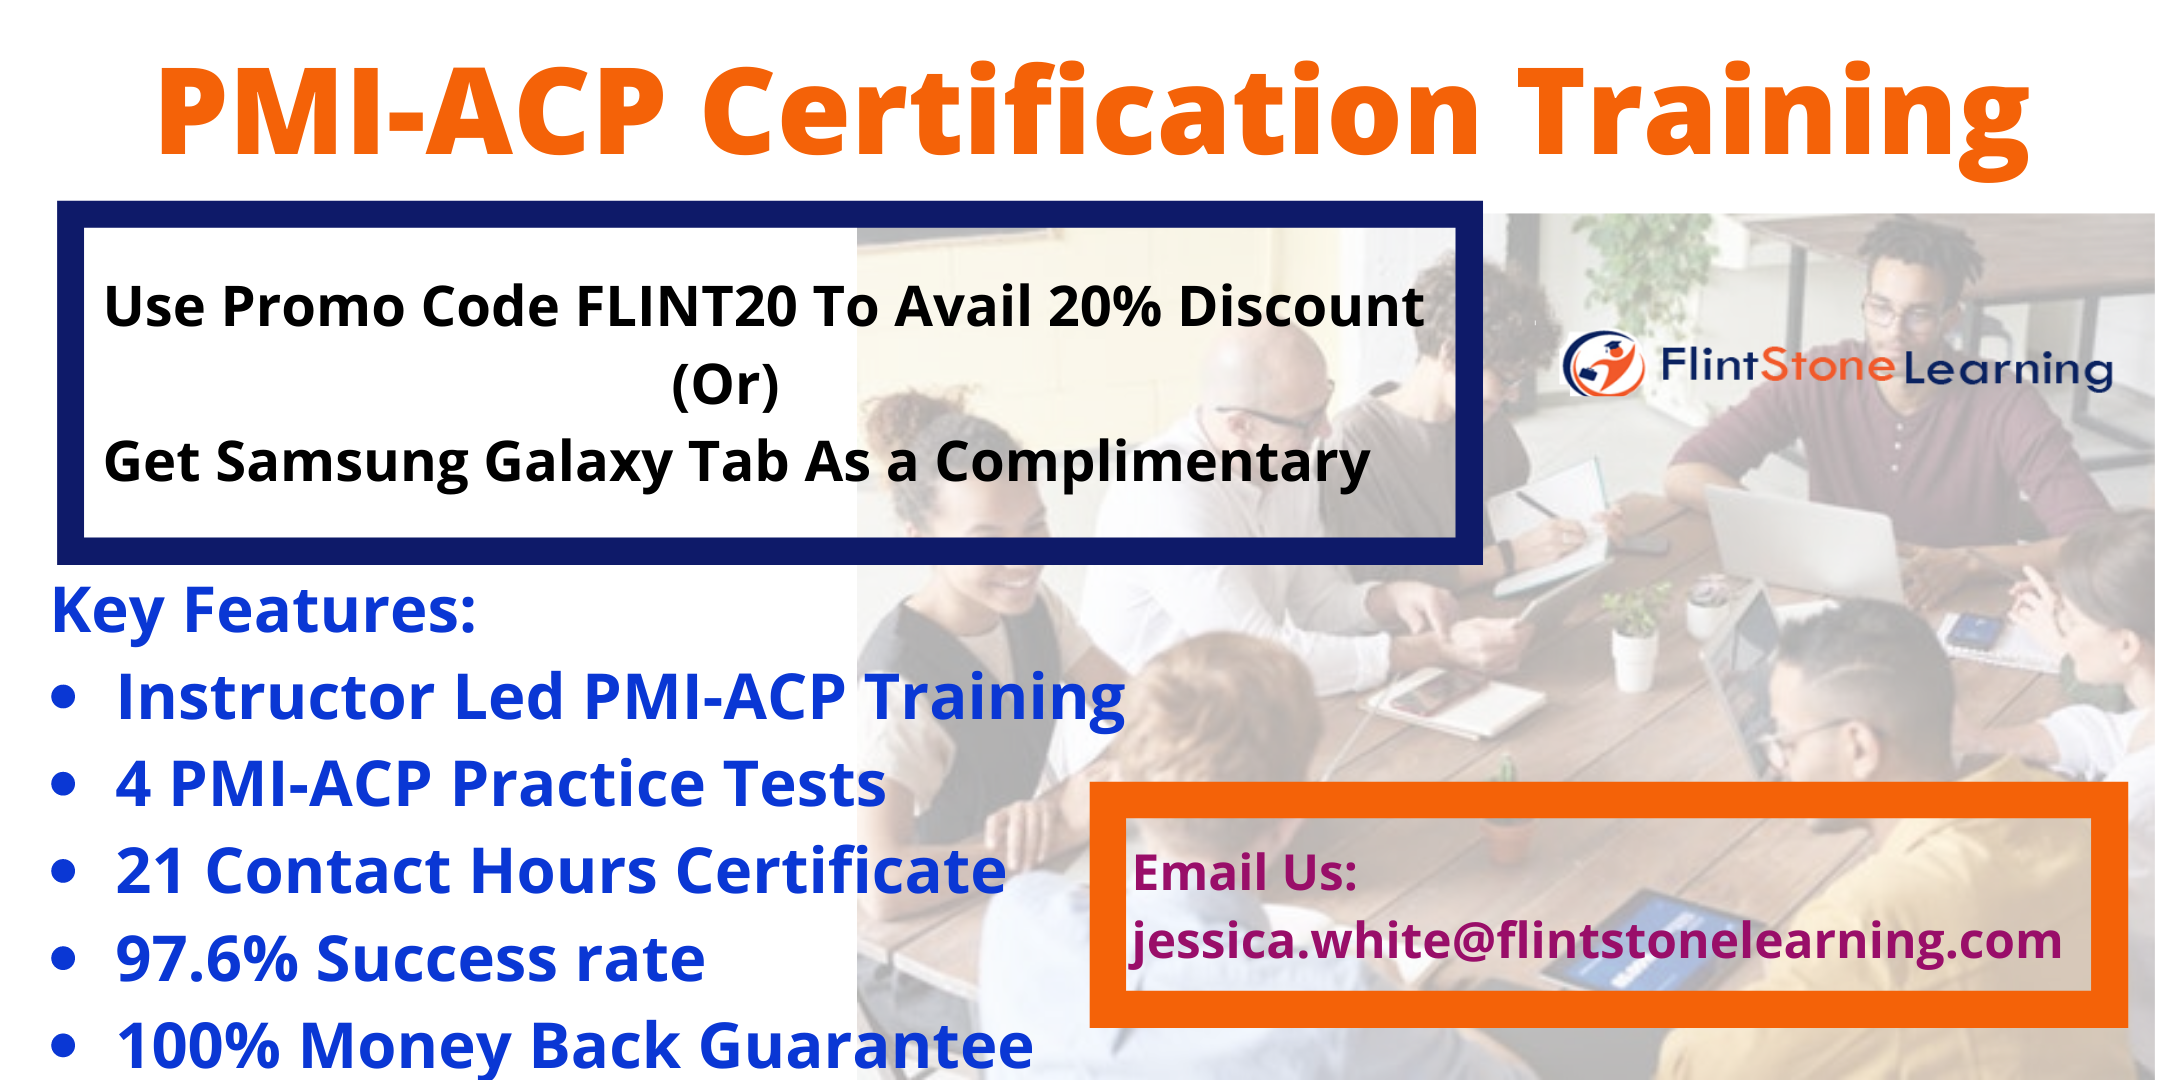 PMI-ACP Certification Training in Tulsa, OK, Tulsa, Oklahoma, United States